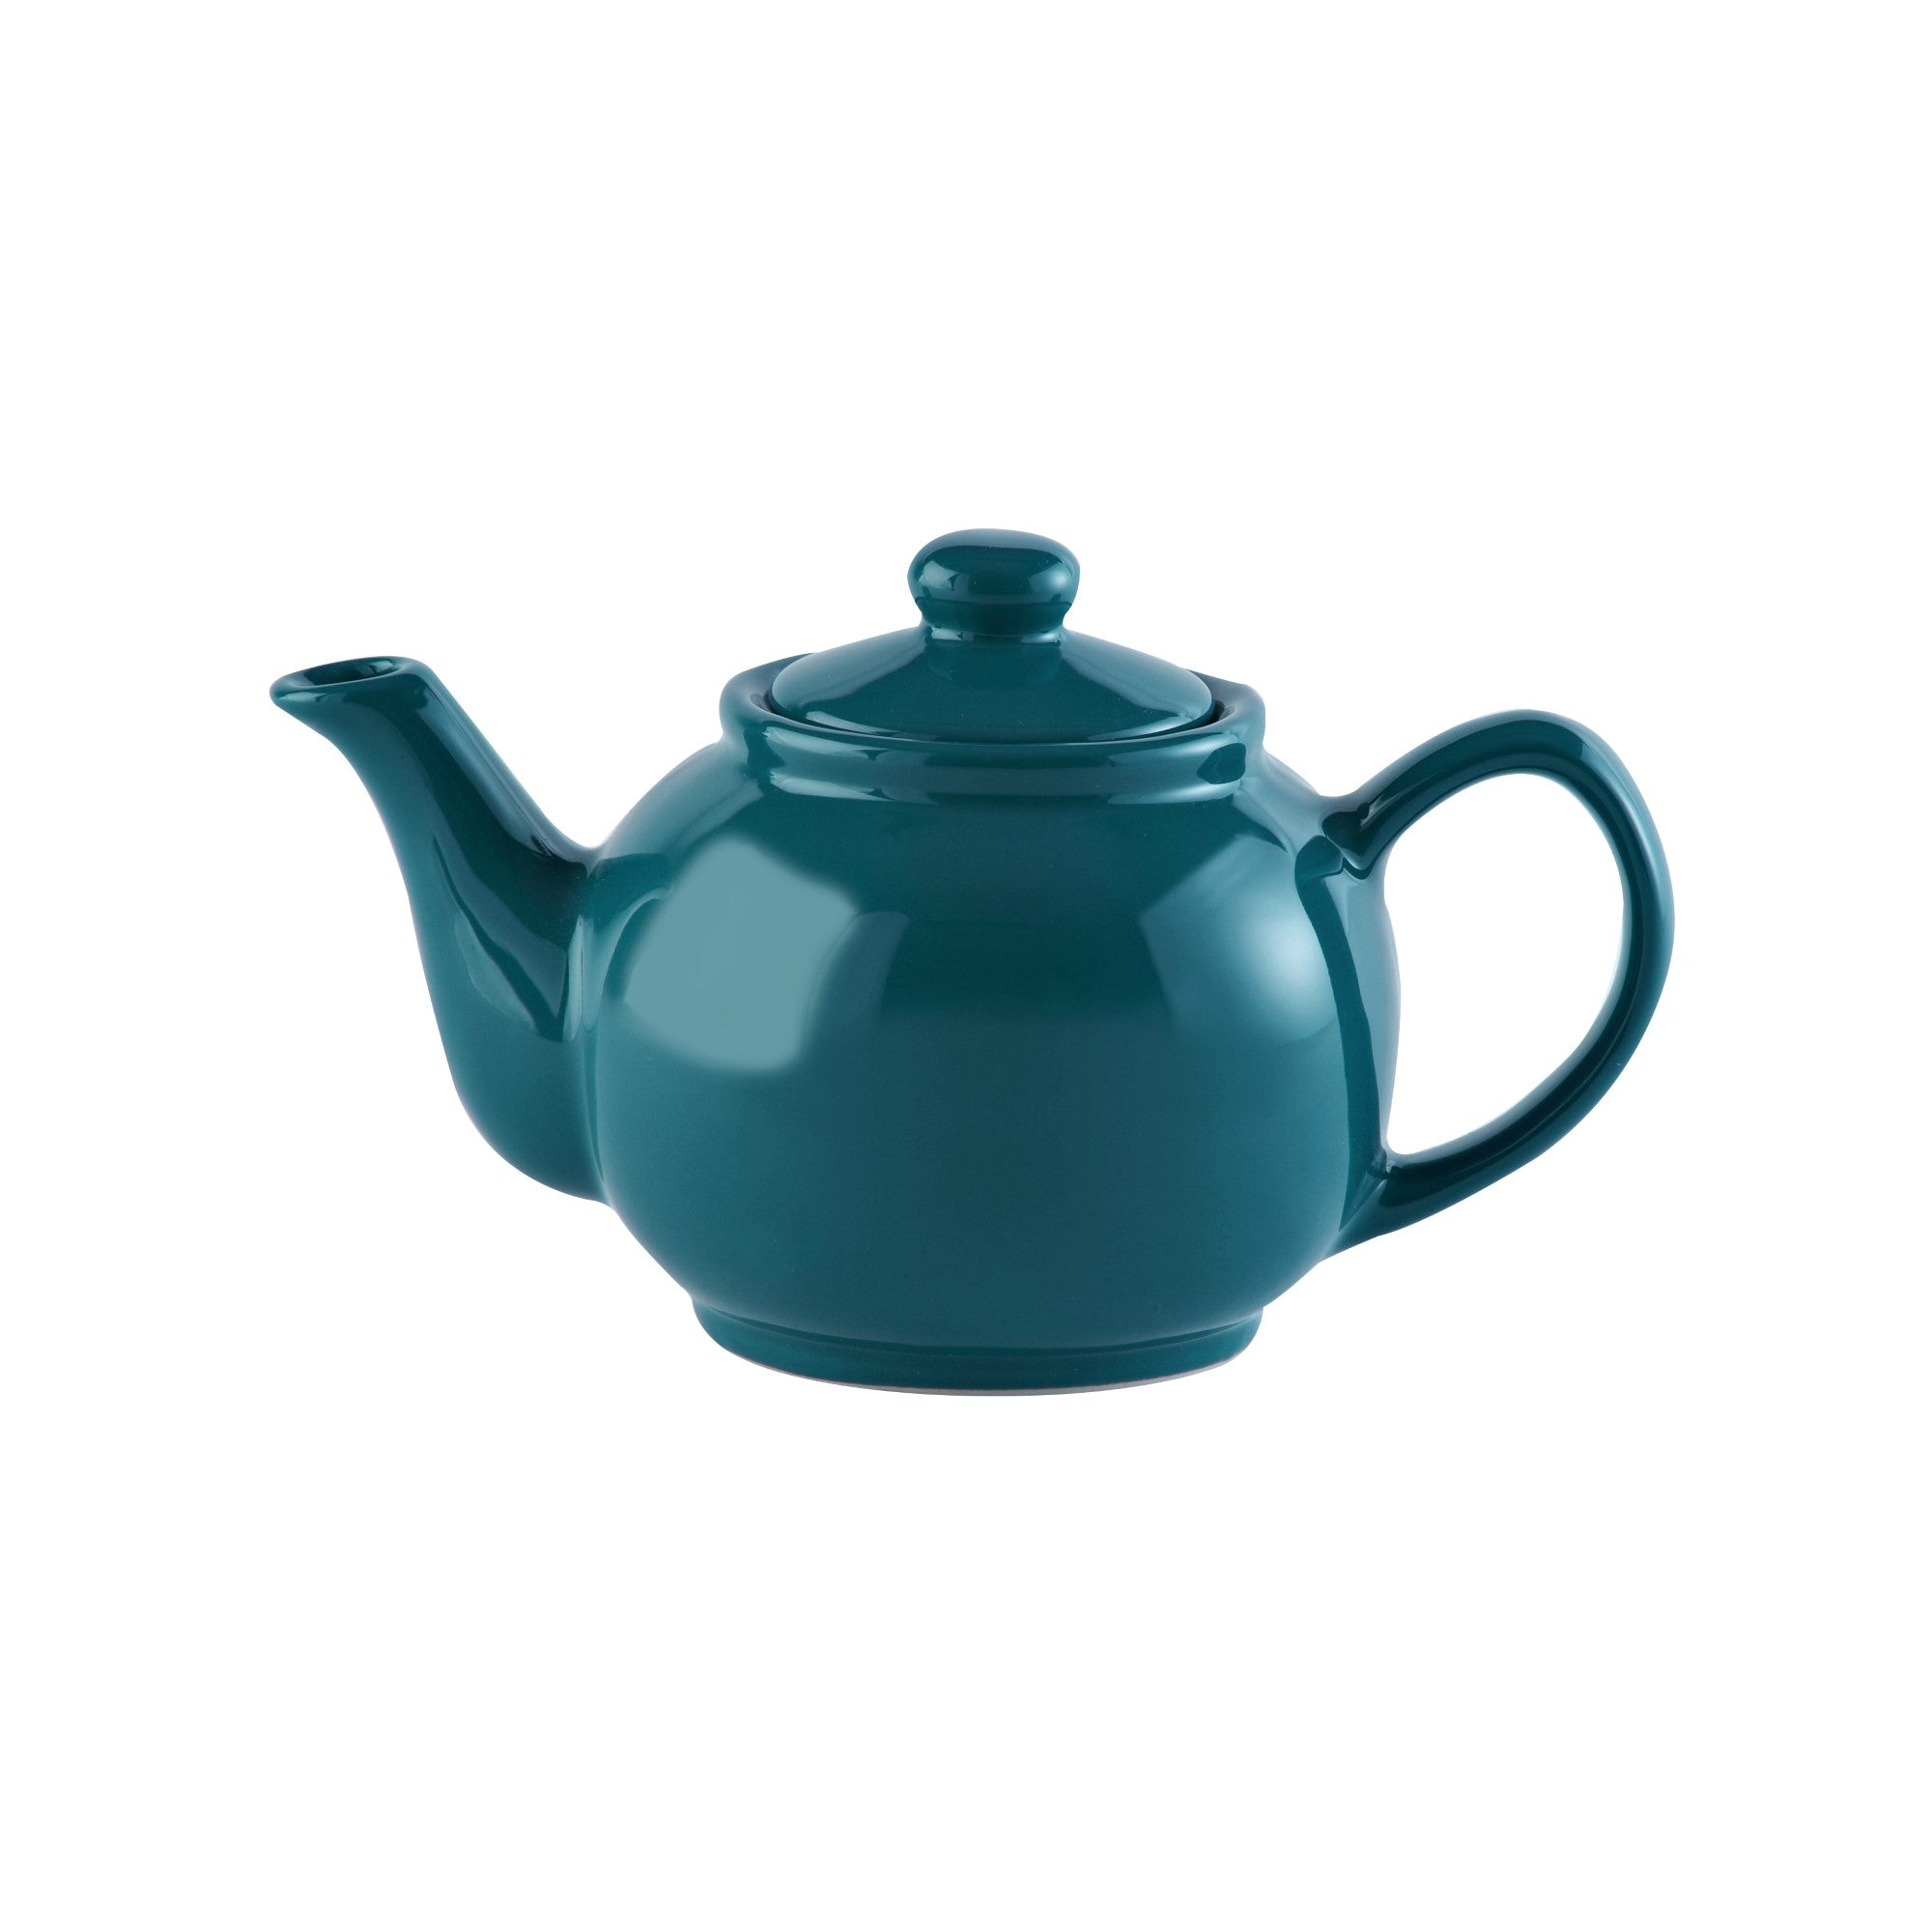 Teal Porcelain Green Tea Coffee 2 Cup Teapot